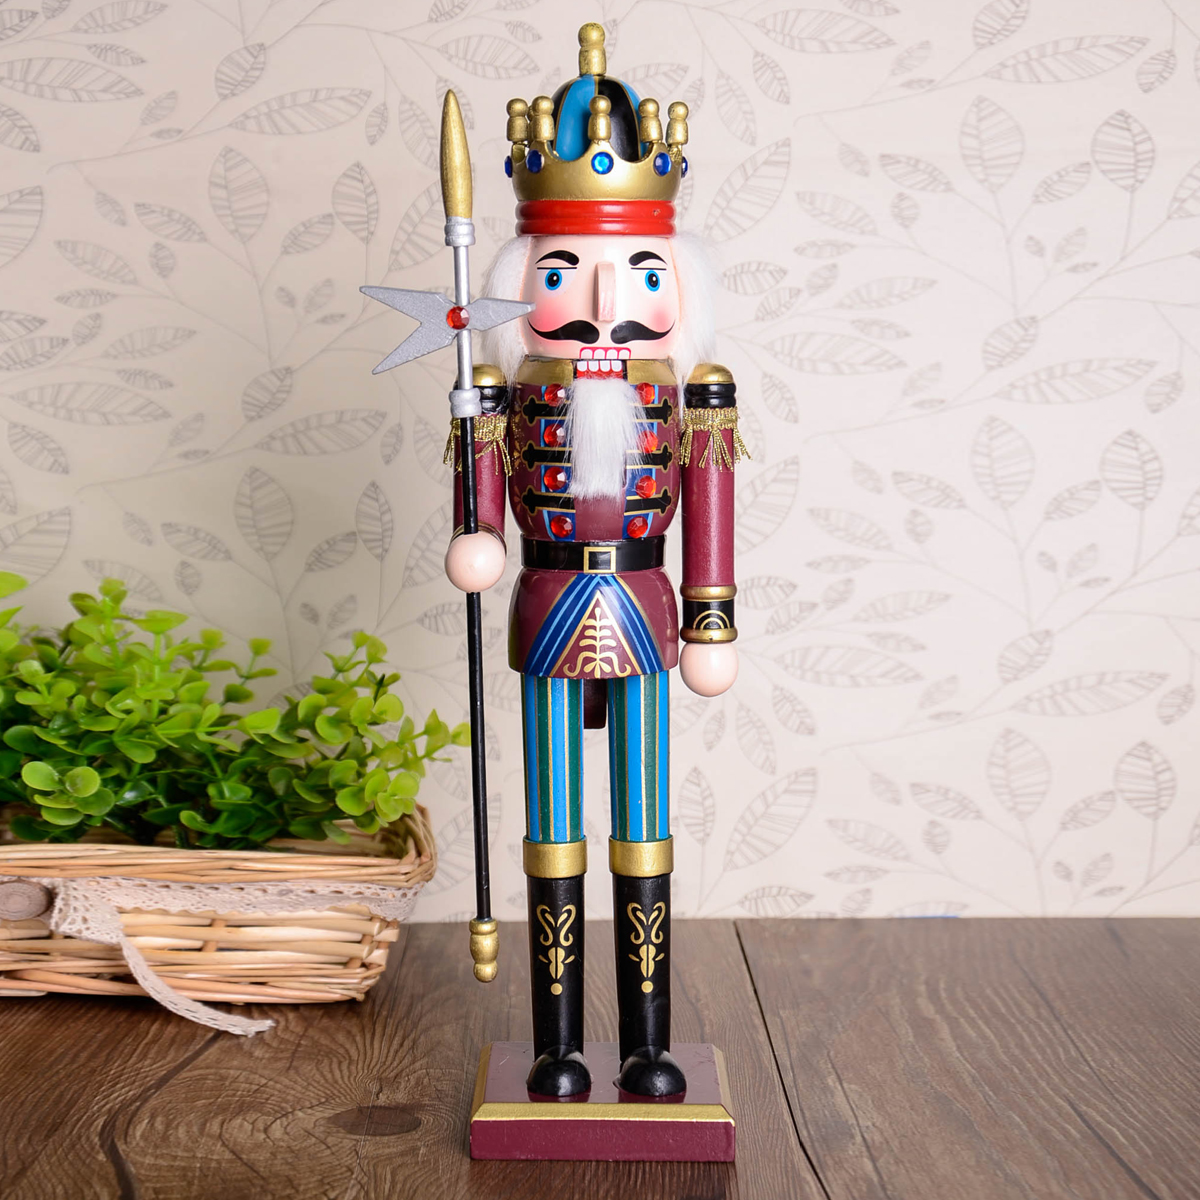 30cm-Wooden-Nutcracker-Doll-Soldier-Vintage-Handcraft-Decoration-Christmas-Gifts-1236558-5